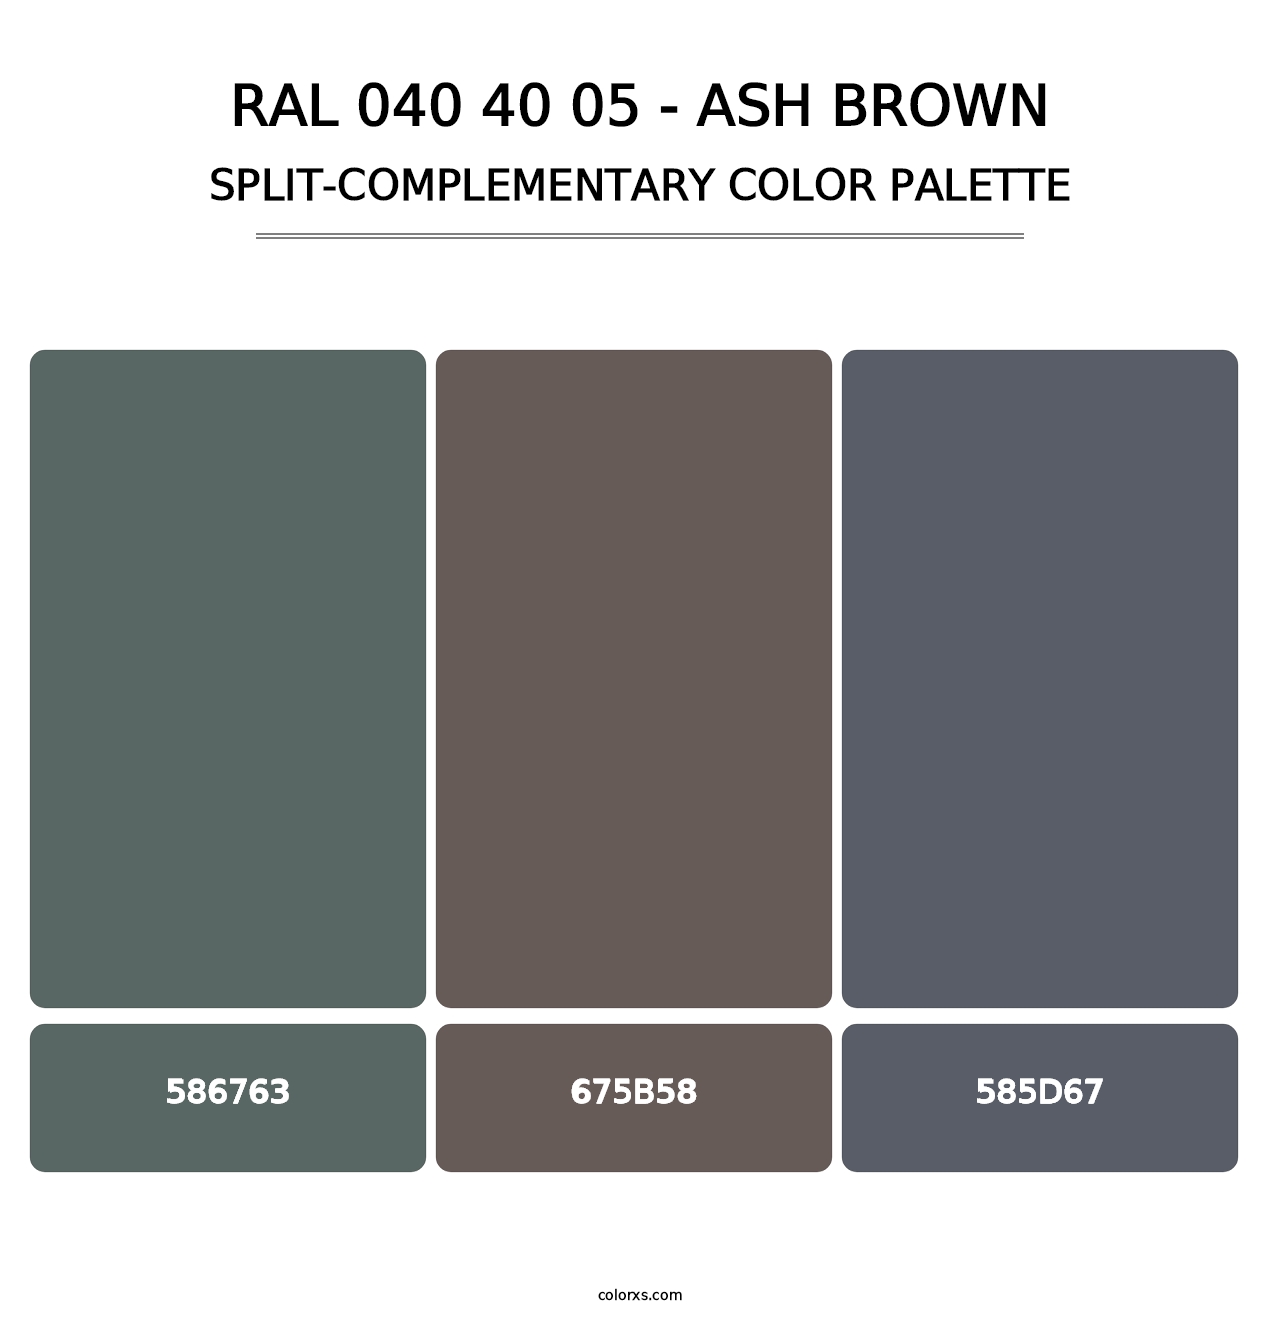 RAL 040 40 05 - Ash Brown - Split-Complementary Color Palette